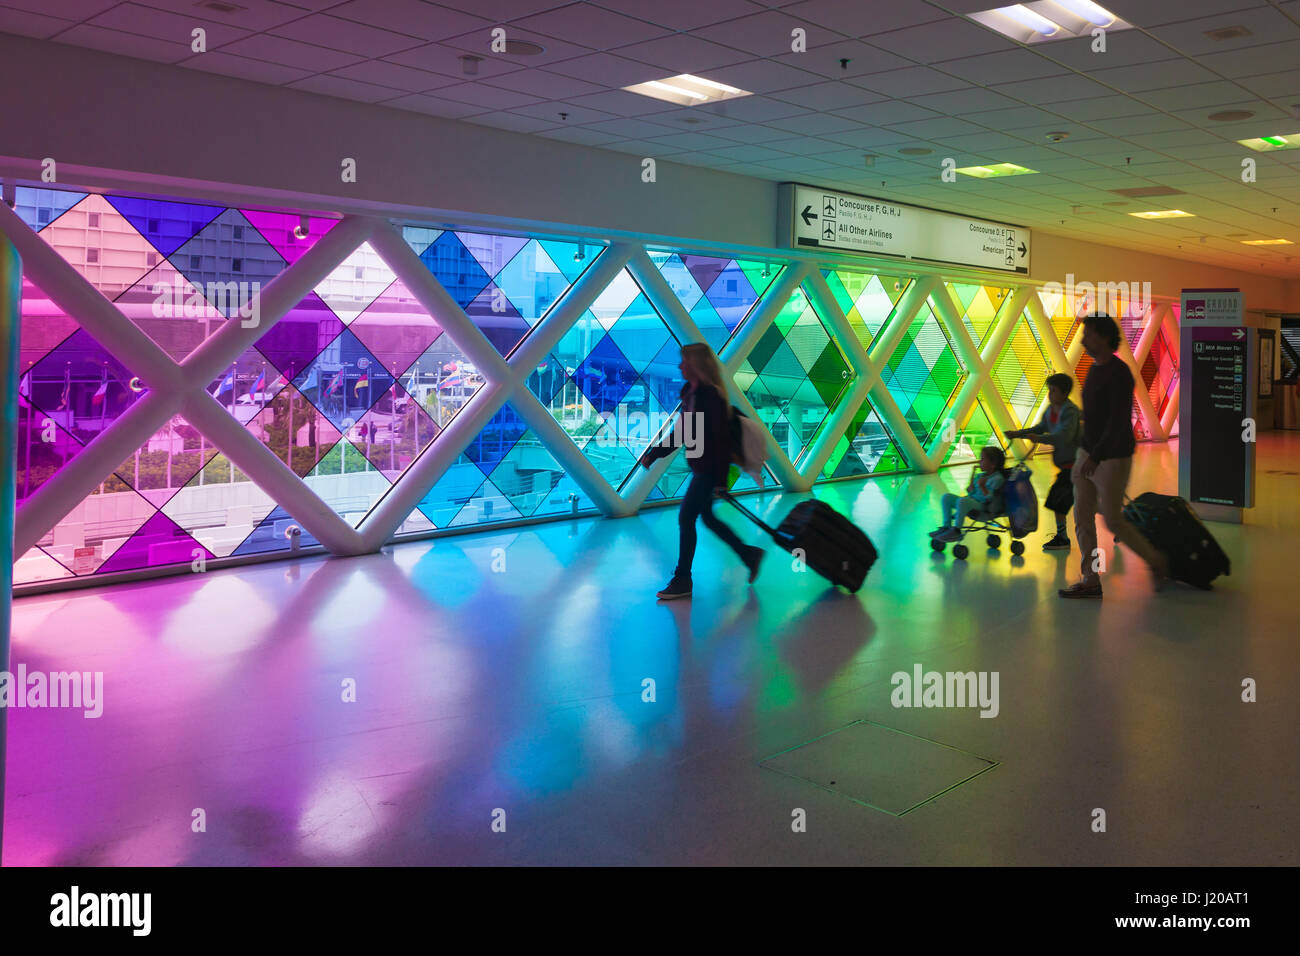 Miami, Fl, USA - March 24, 2017: Colorful windows in the Miami International Airport. Florida, United States Stock Photo